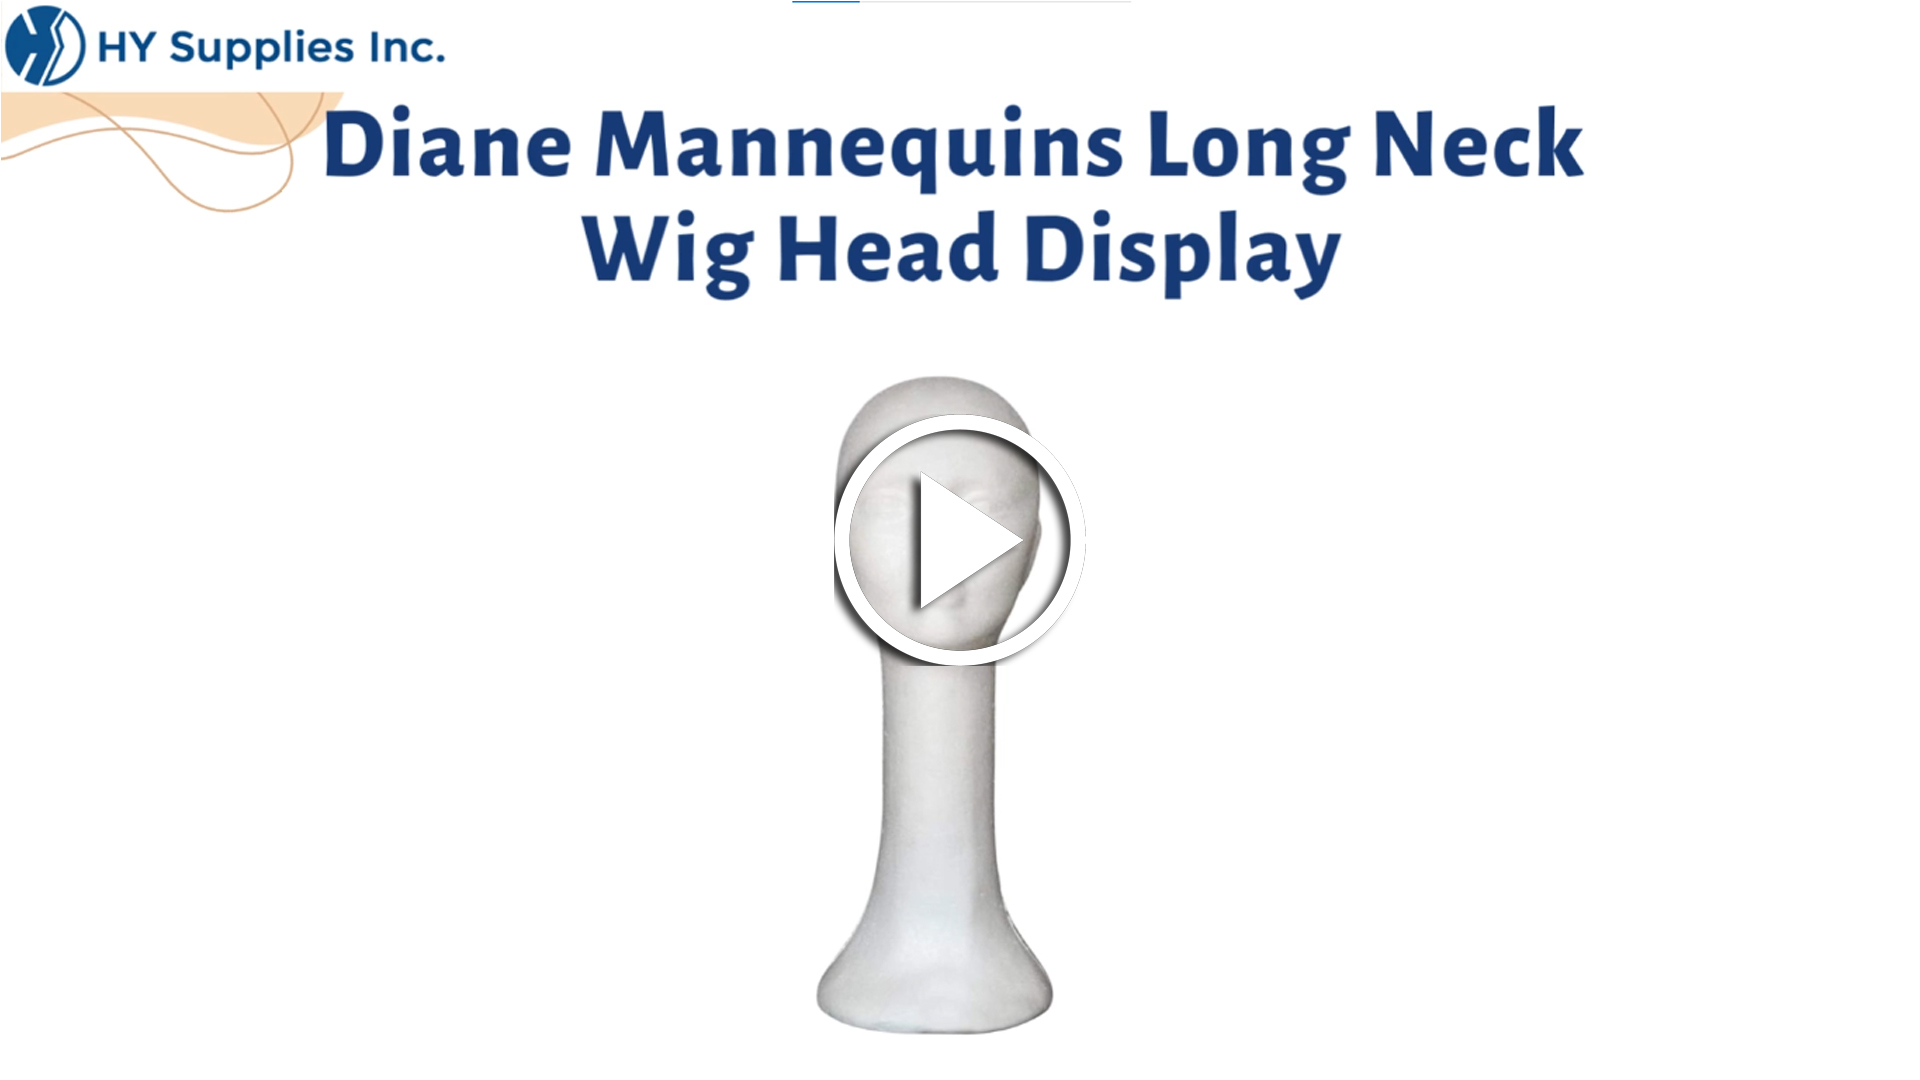 Diane Mannequins Long Neck Wig Head Display